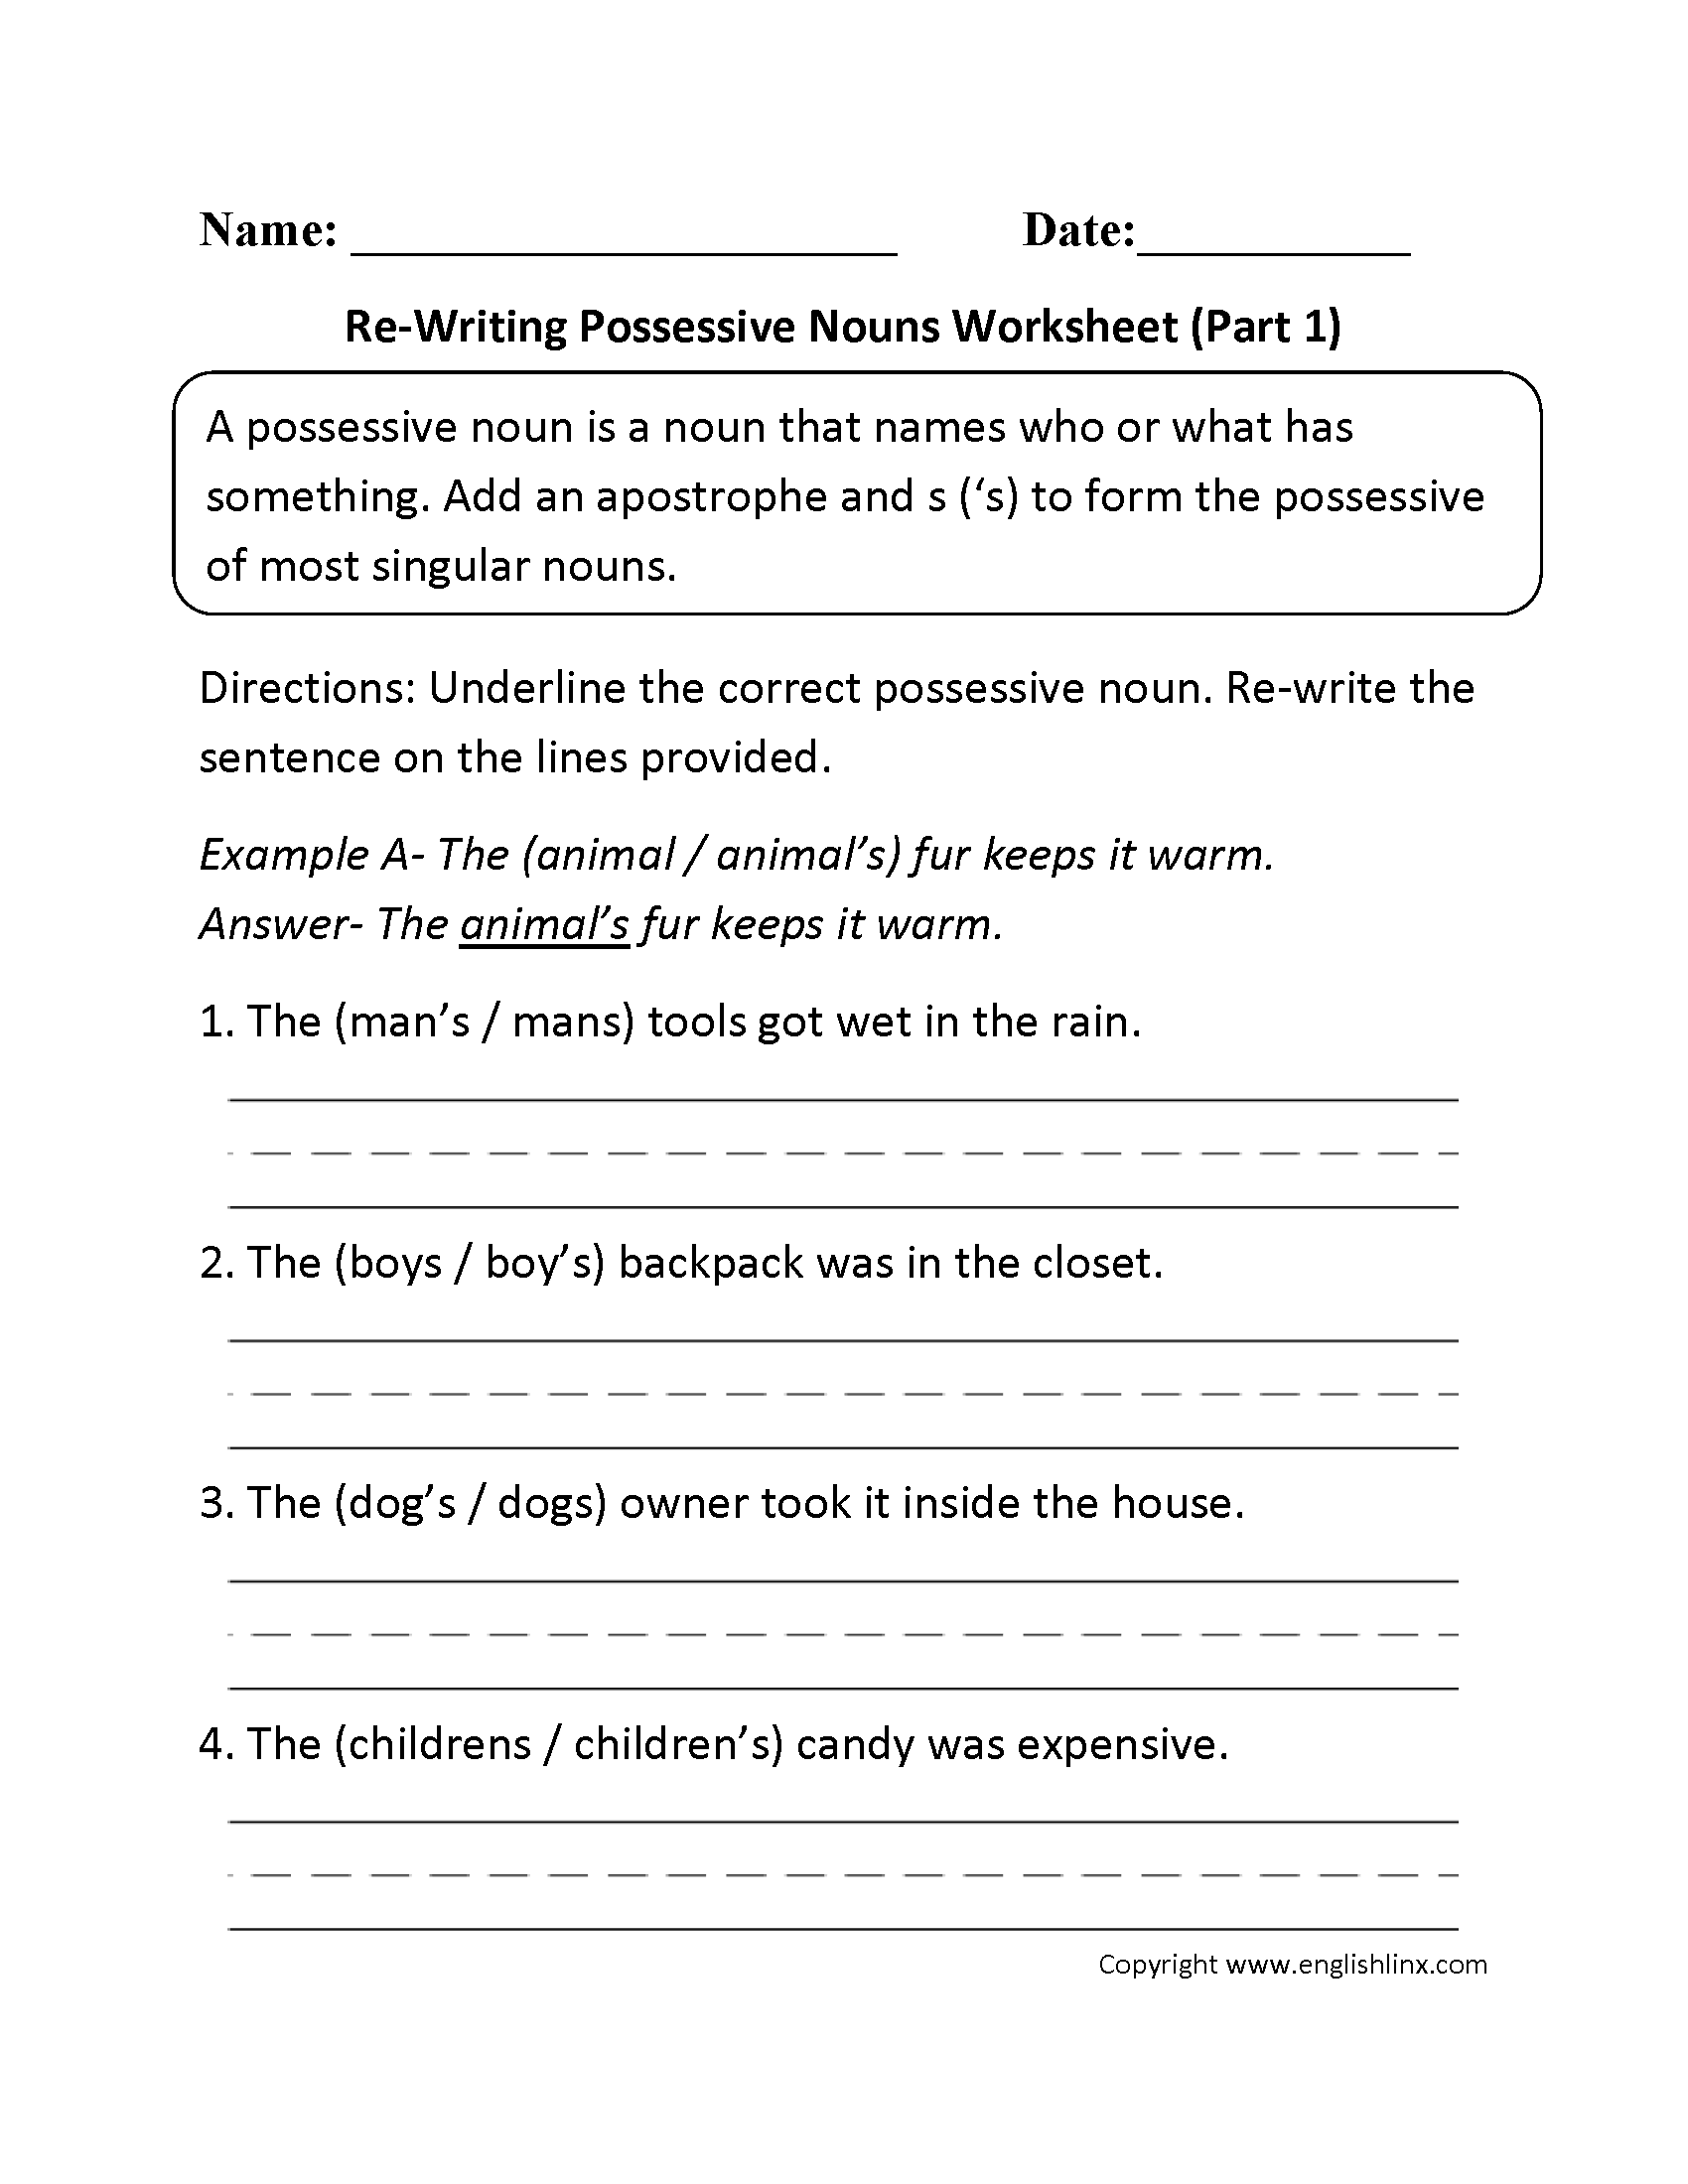 Possessive Nouns Worksheets | Re-Writing Possessive Nouns Worksheet Part 1